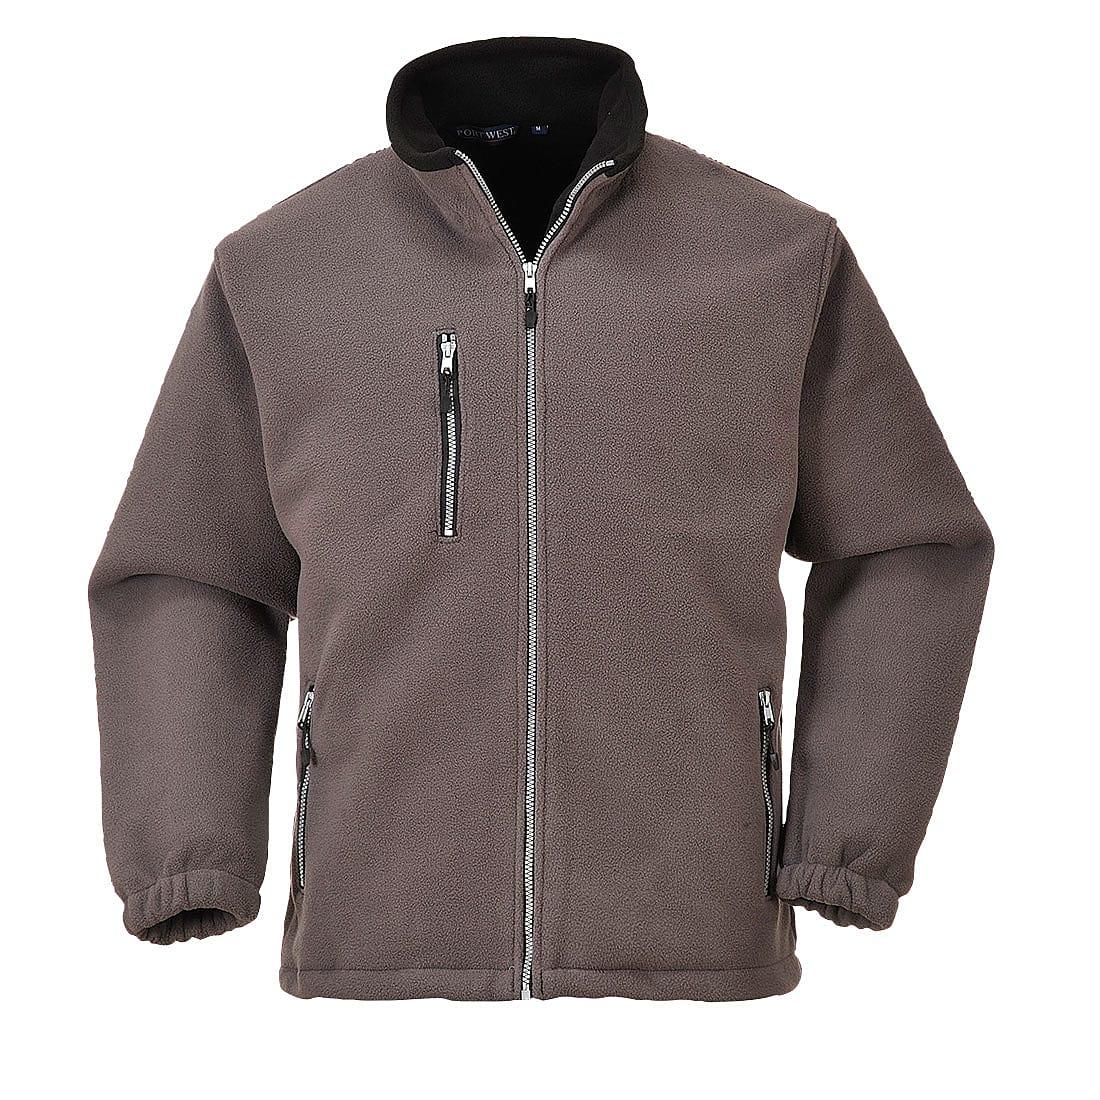 Portwest City Fleece Jacket in Grey (Product Code: F401)